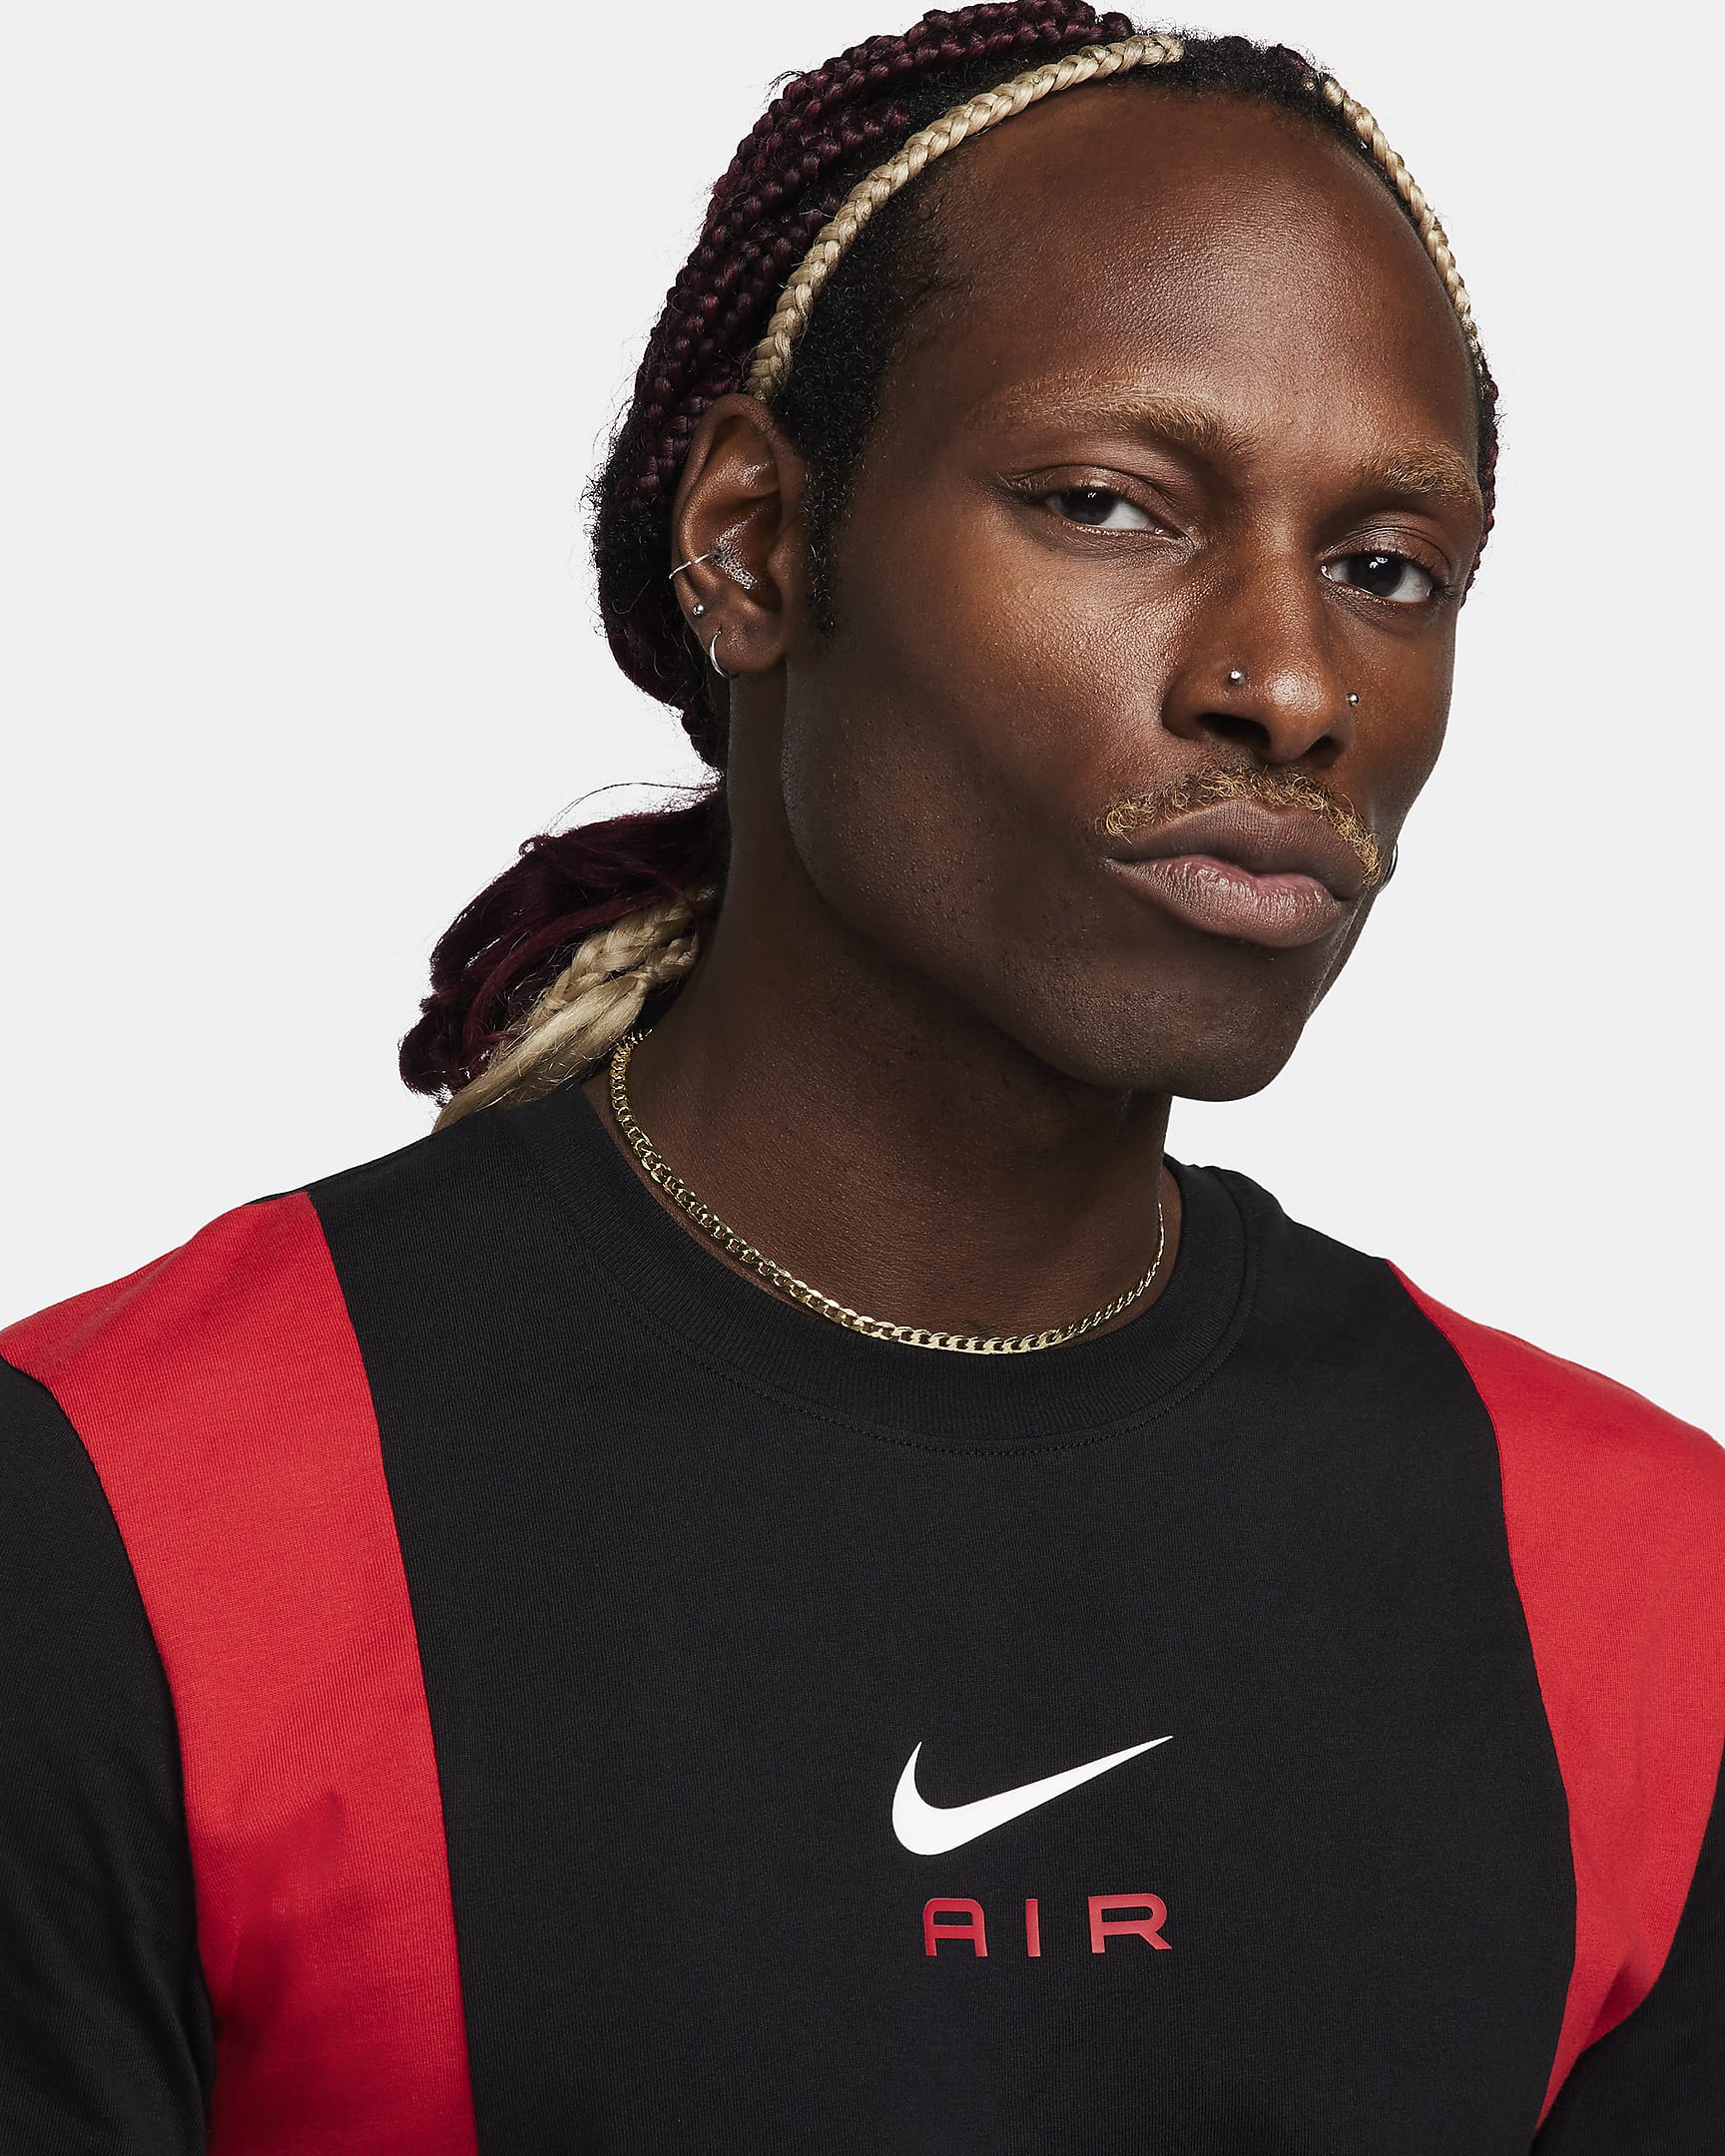 Nike Air Men's Short-Sleeve Top